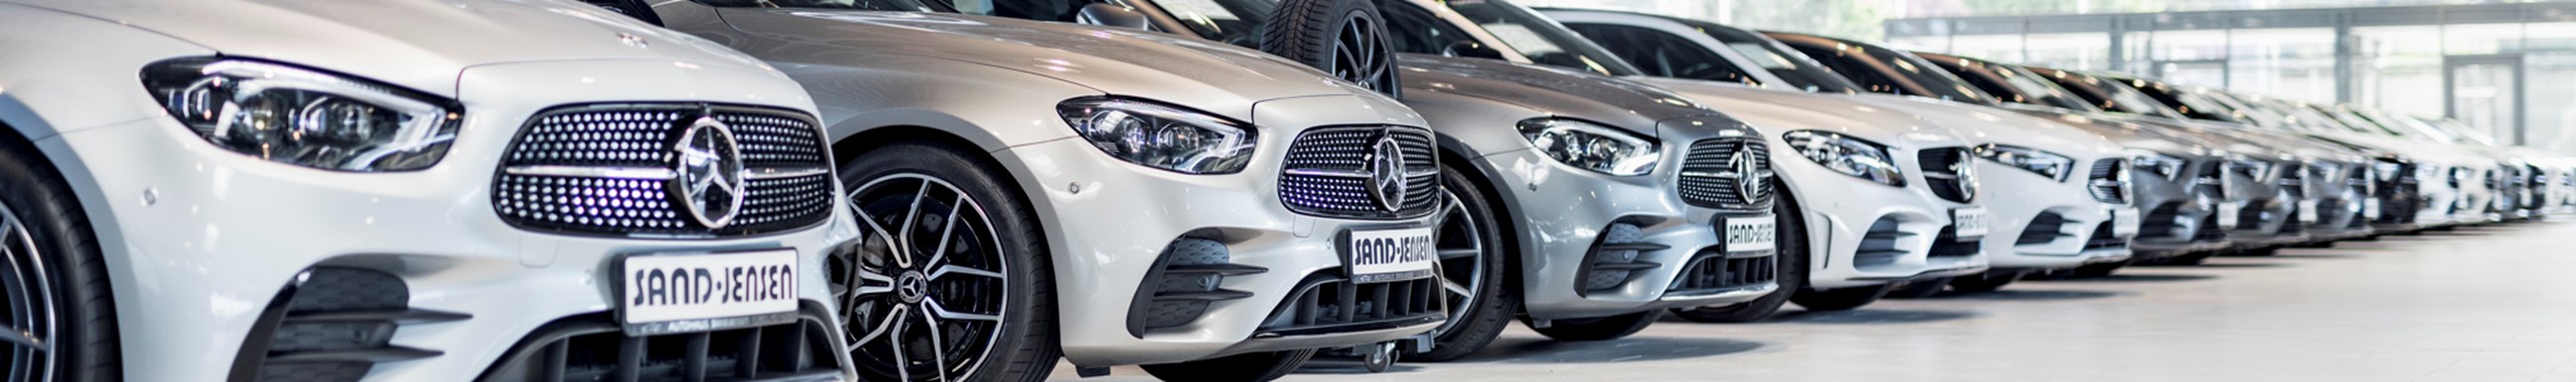 Mercedes-Fahrzeuge im Autohaus Sandjensen